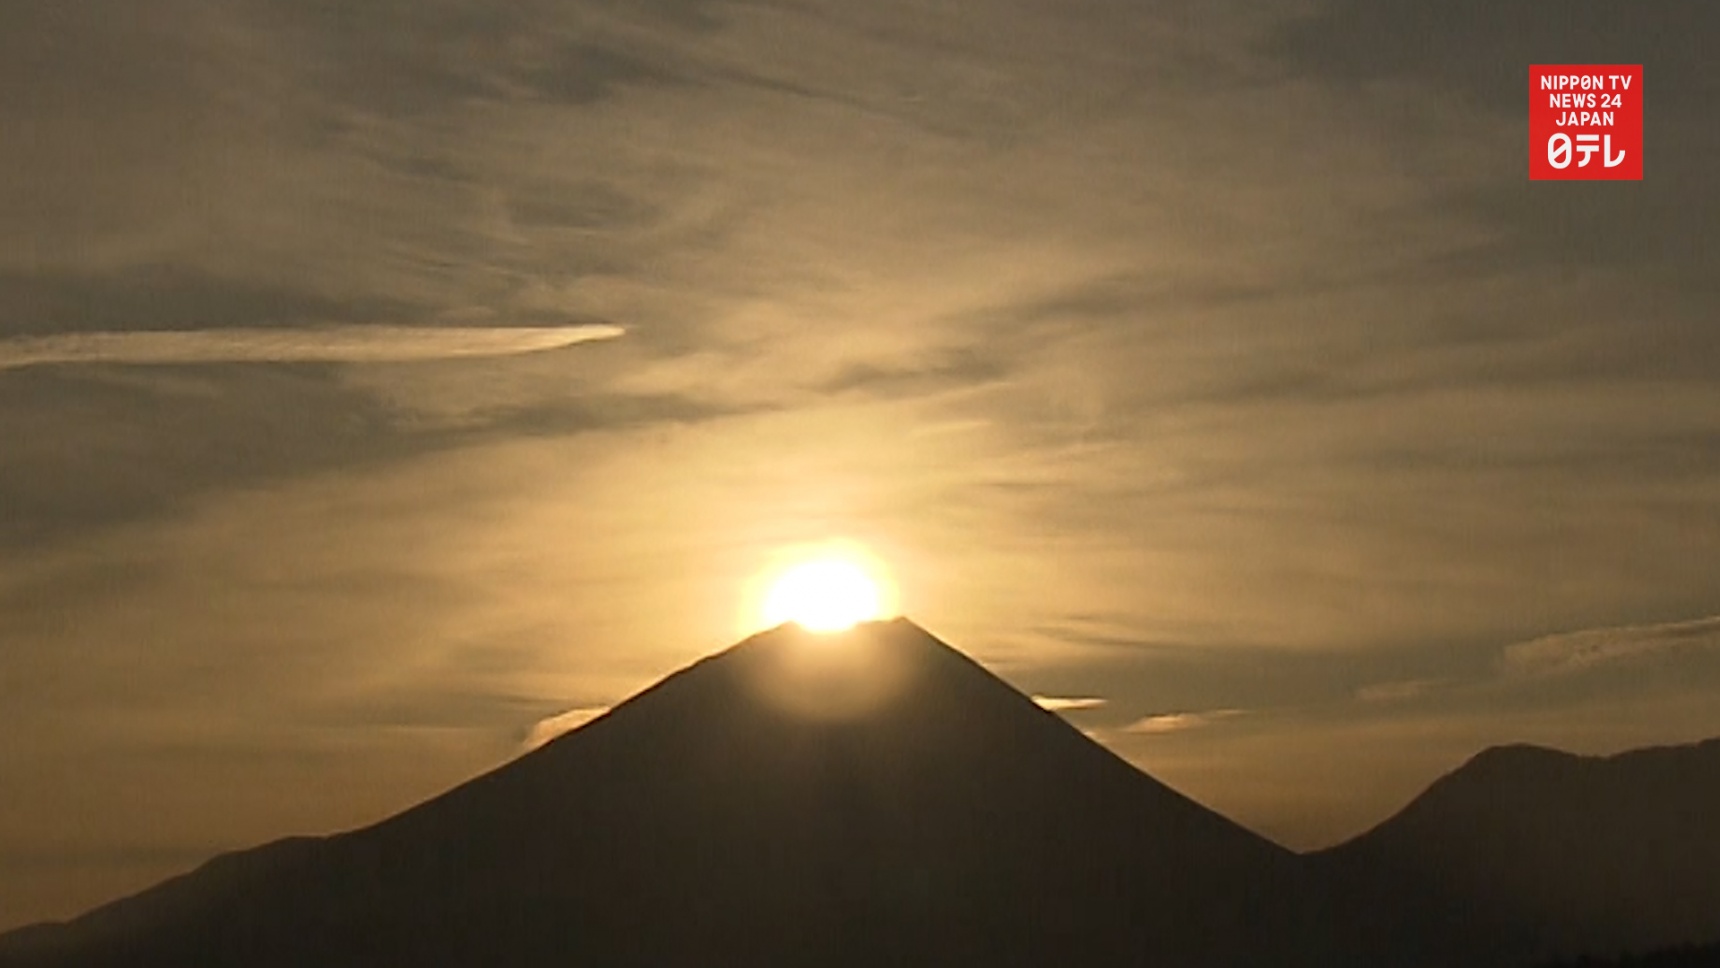 Mount Fuji Shining Bright Like a Diamond